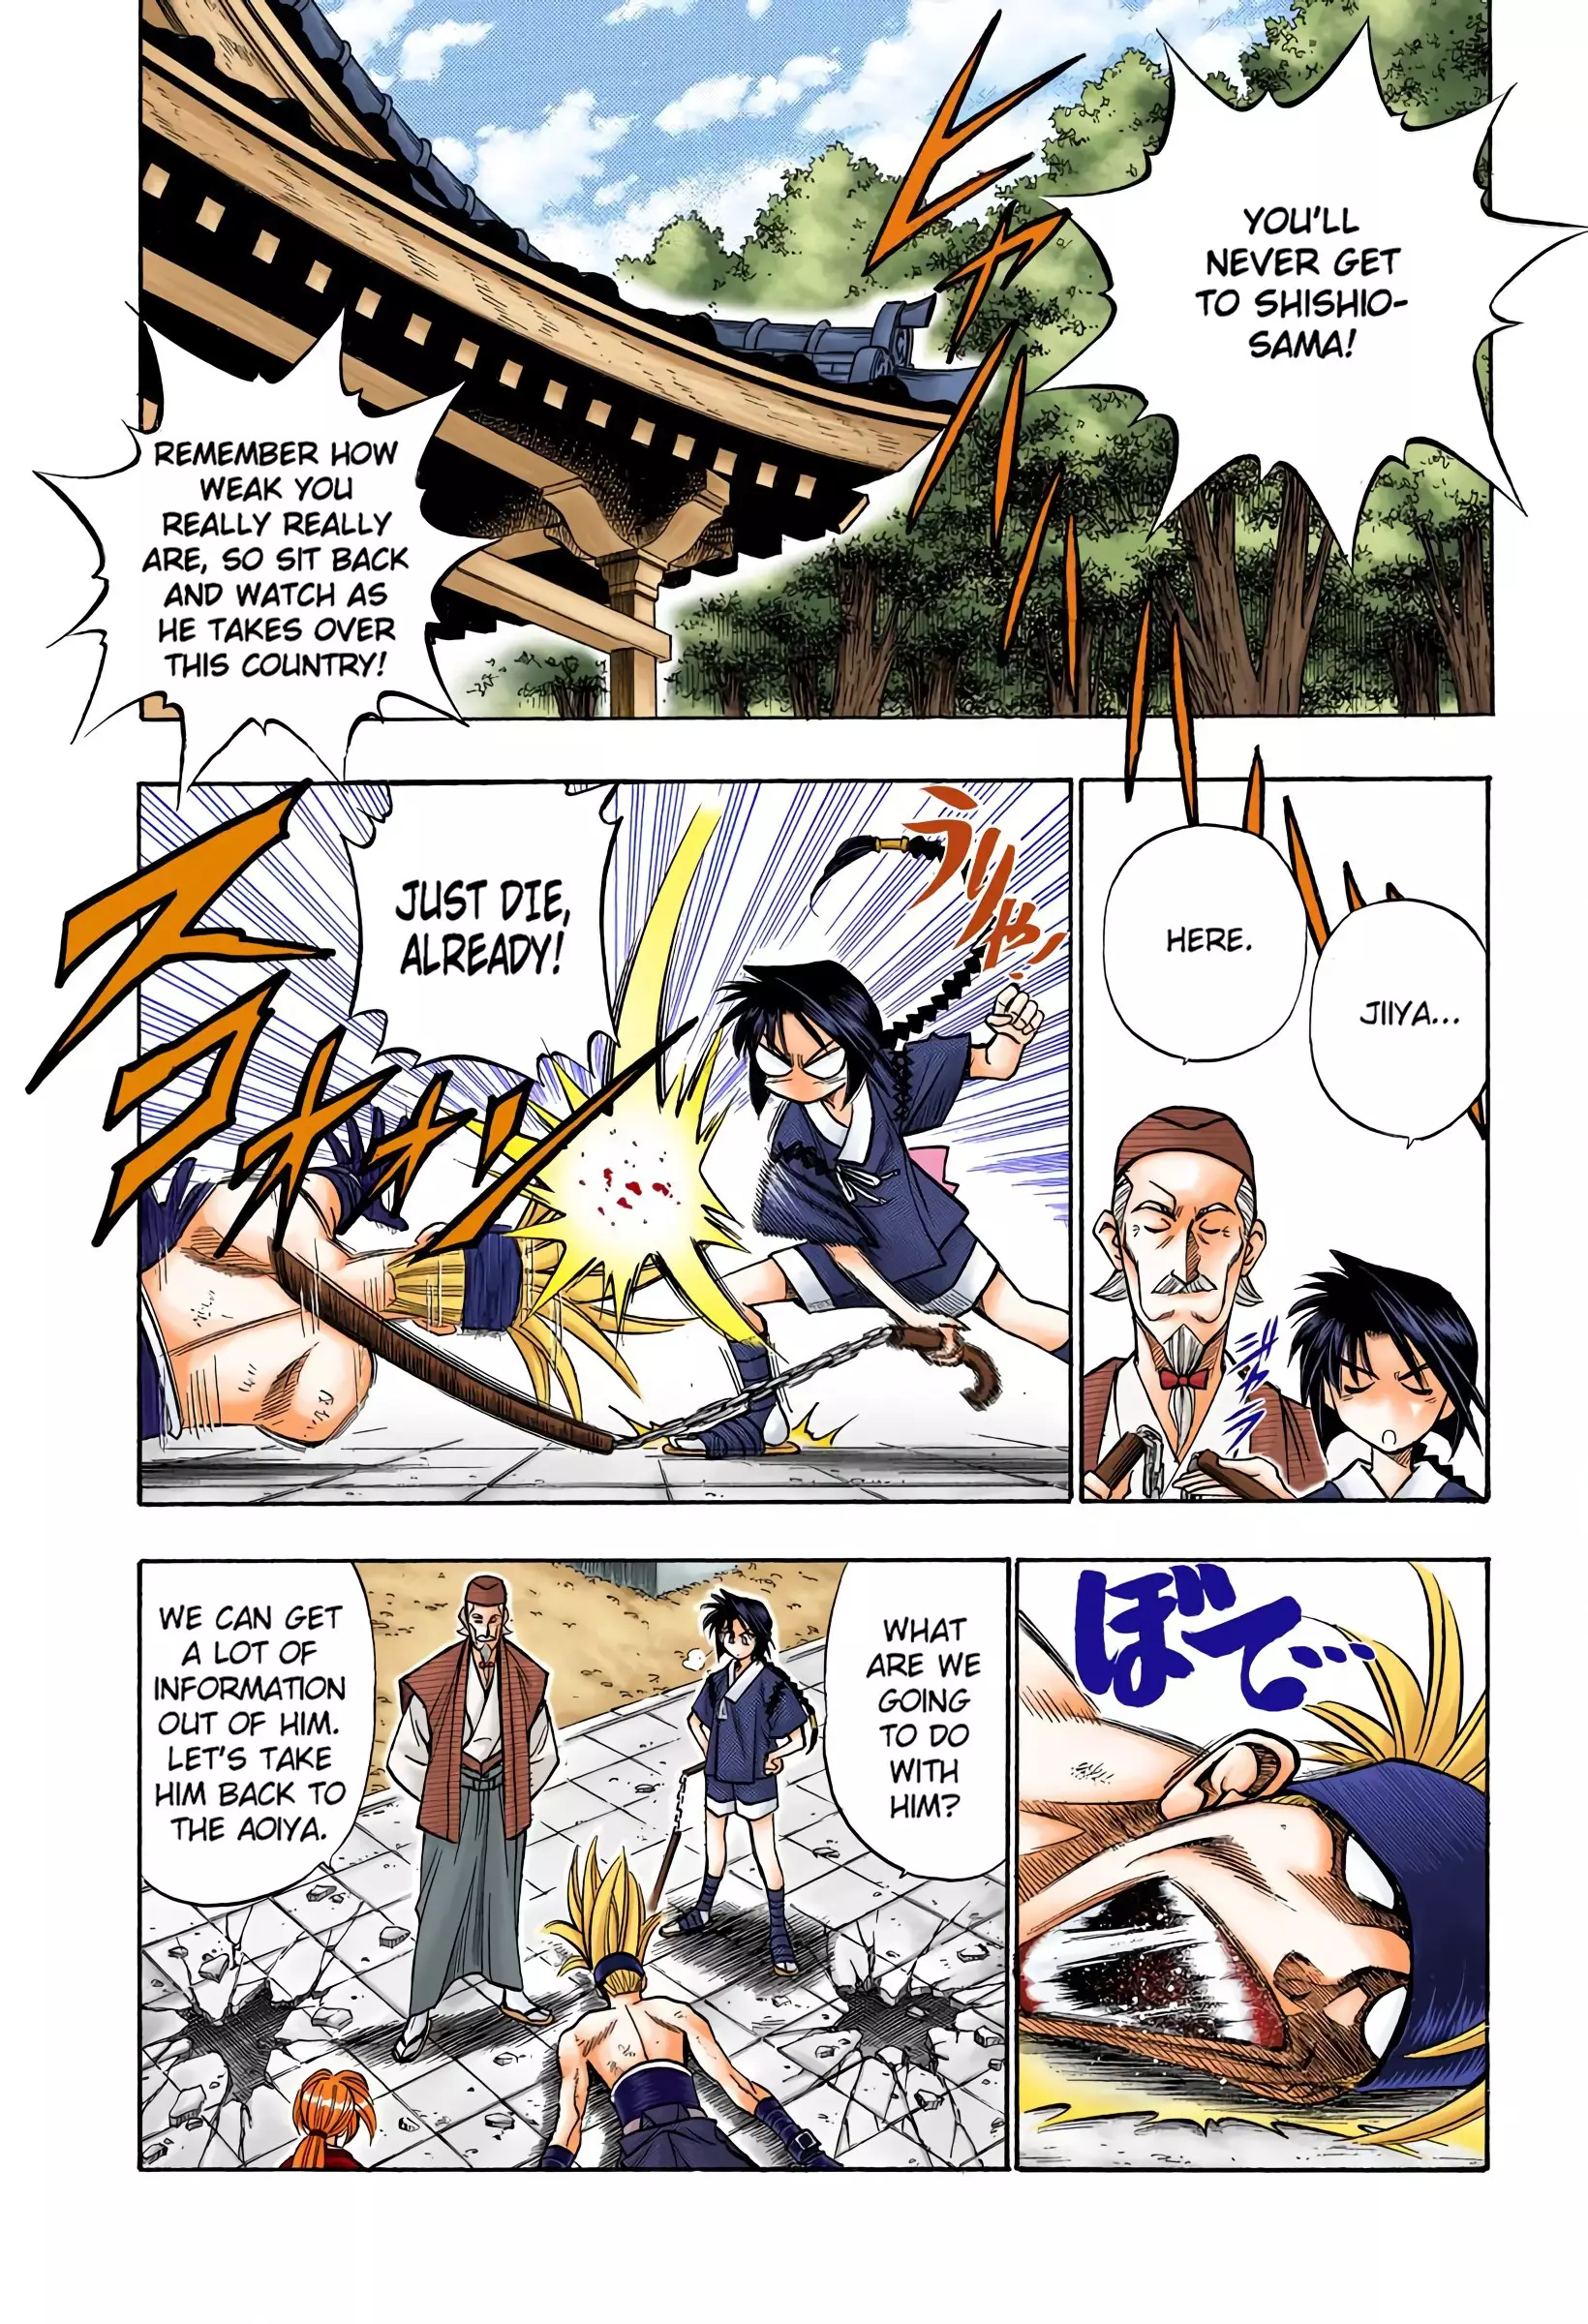 Rurouni Kenshin: Meiji Kenkaku Romantan - Digital Colored Comics - 81 page 9-2694c4c1